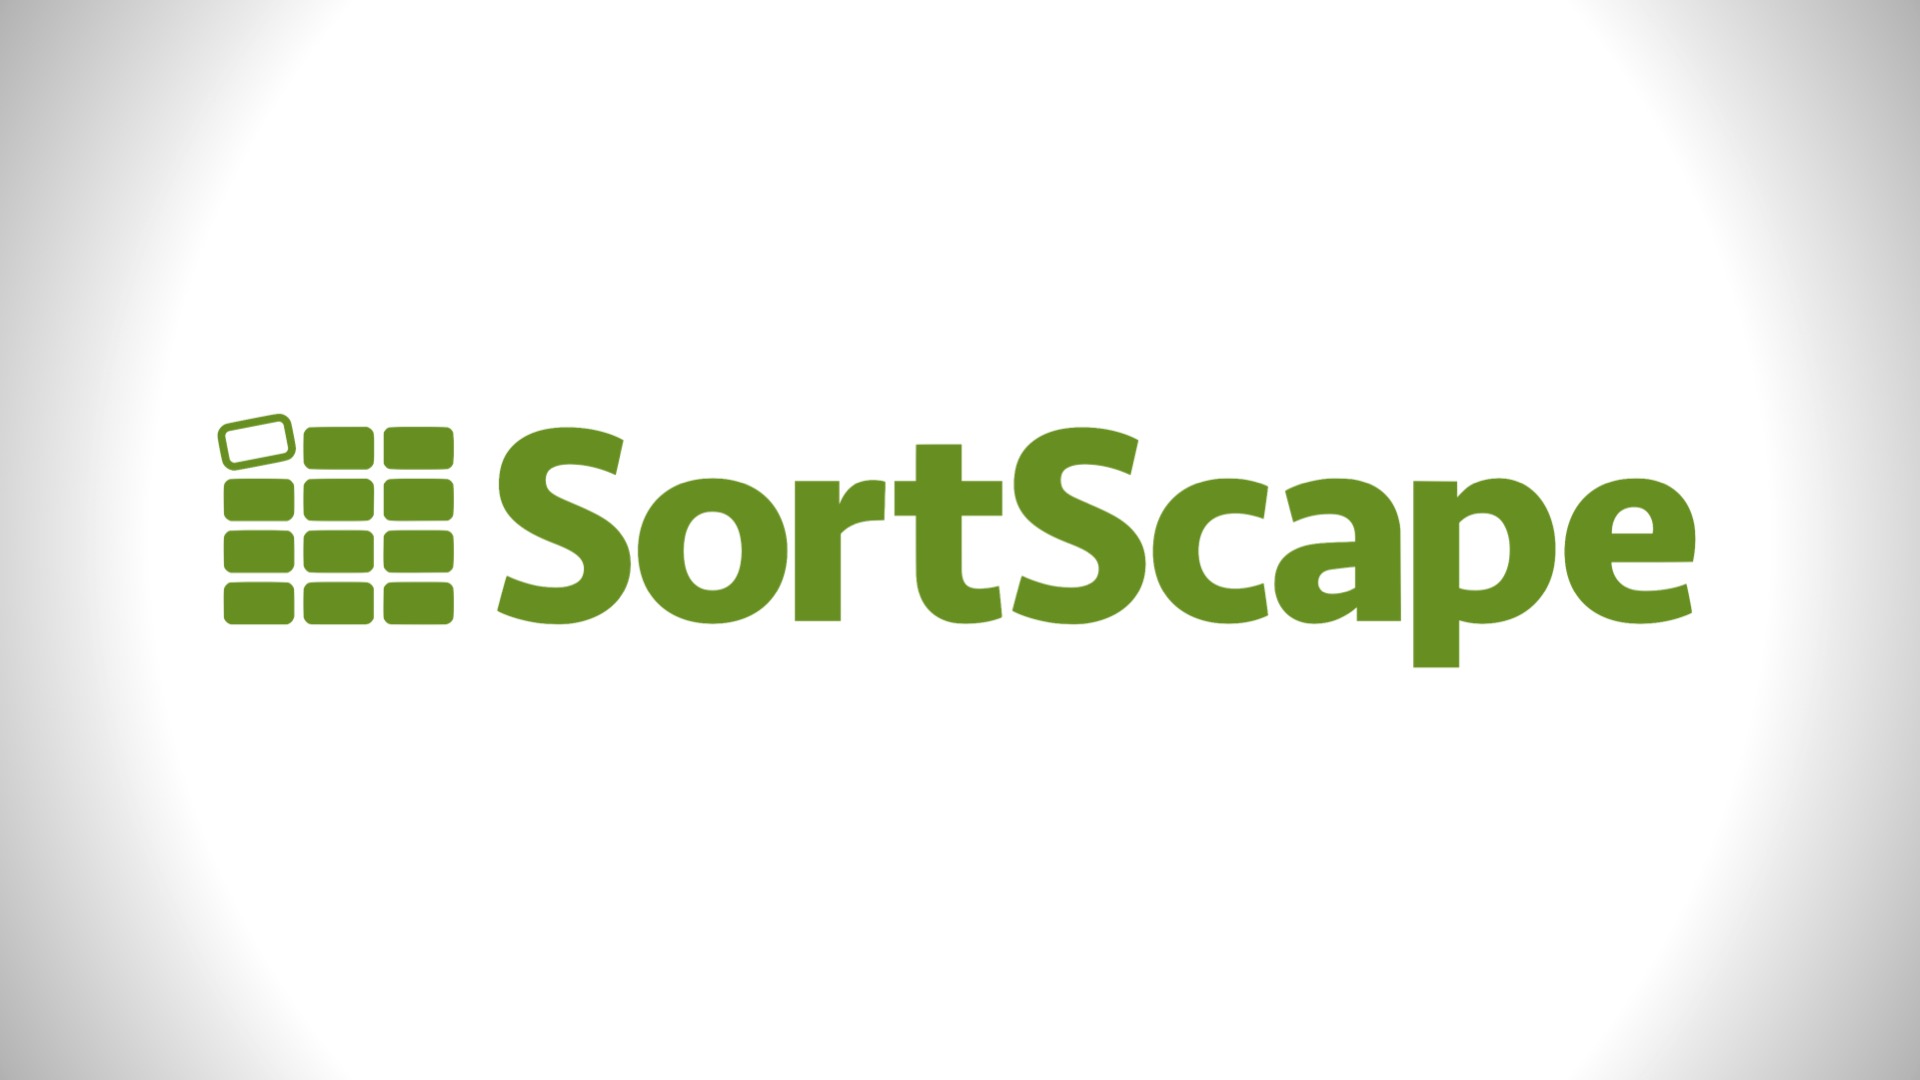 SortScape